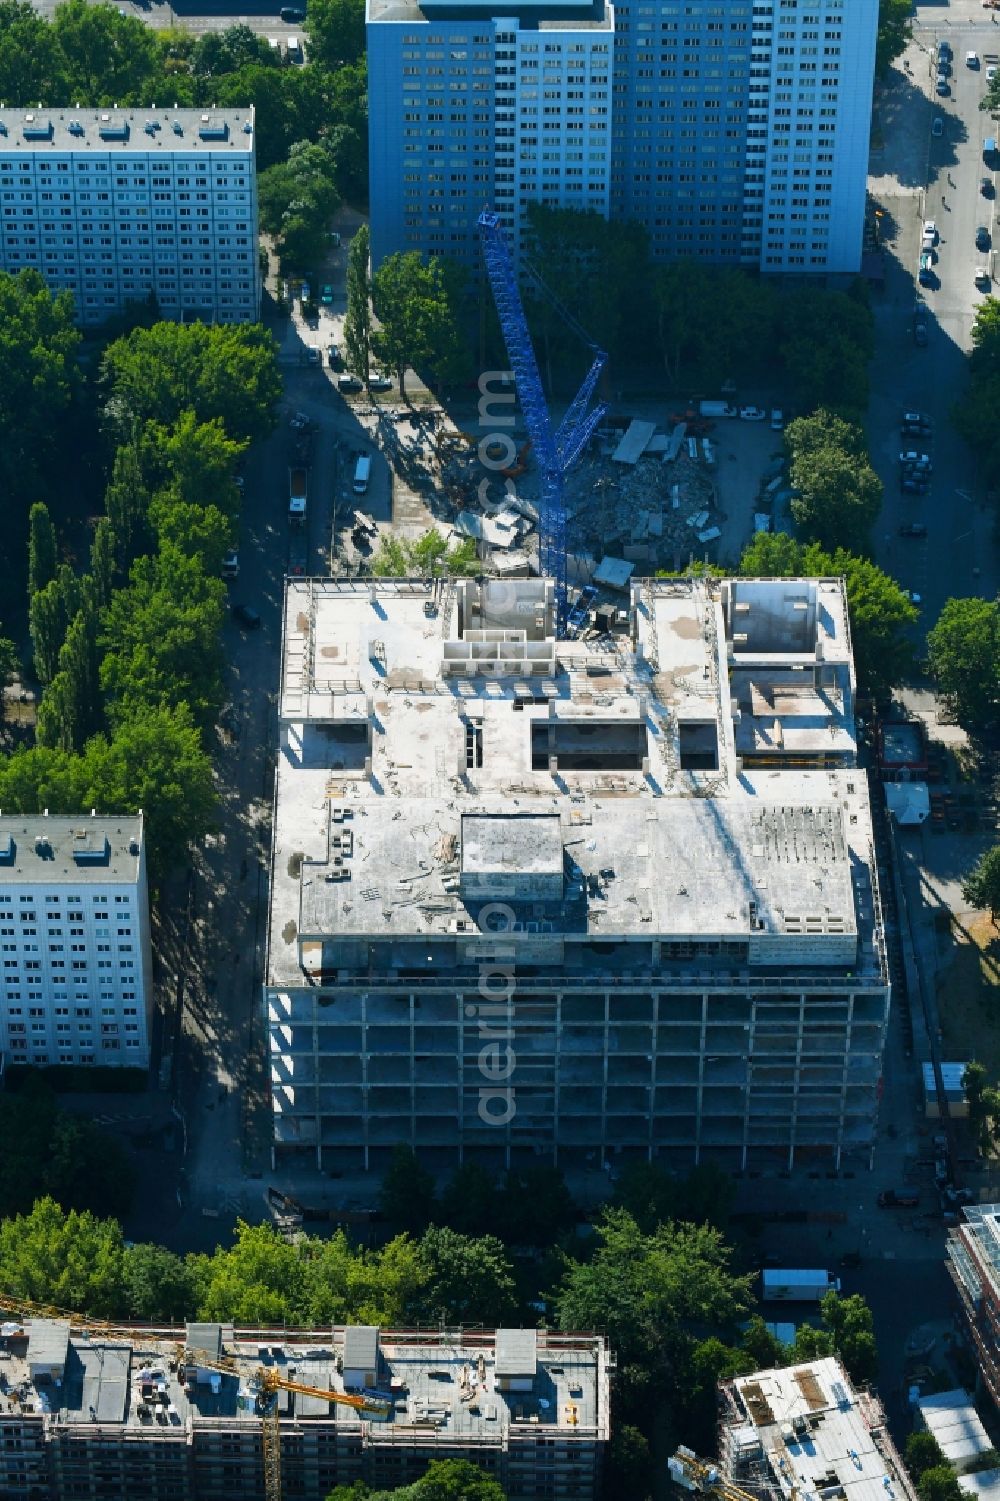 Aerial image Berlin - Partial demolition and reconstruction of the former department store building Kaufhof - Centrum Warenhaus on Hermann-Stoehr-Platz - Koppenstrasse in the district Friedrichshain in Berlin, Germany